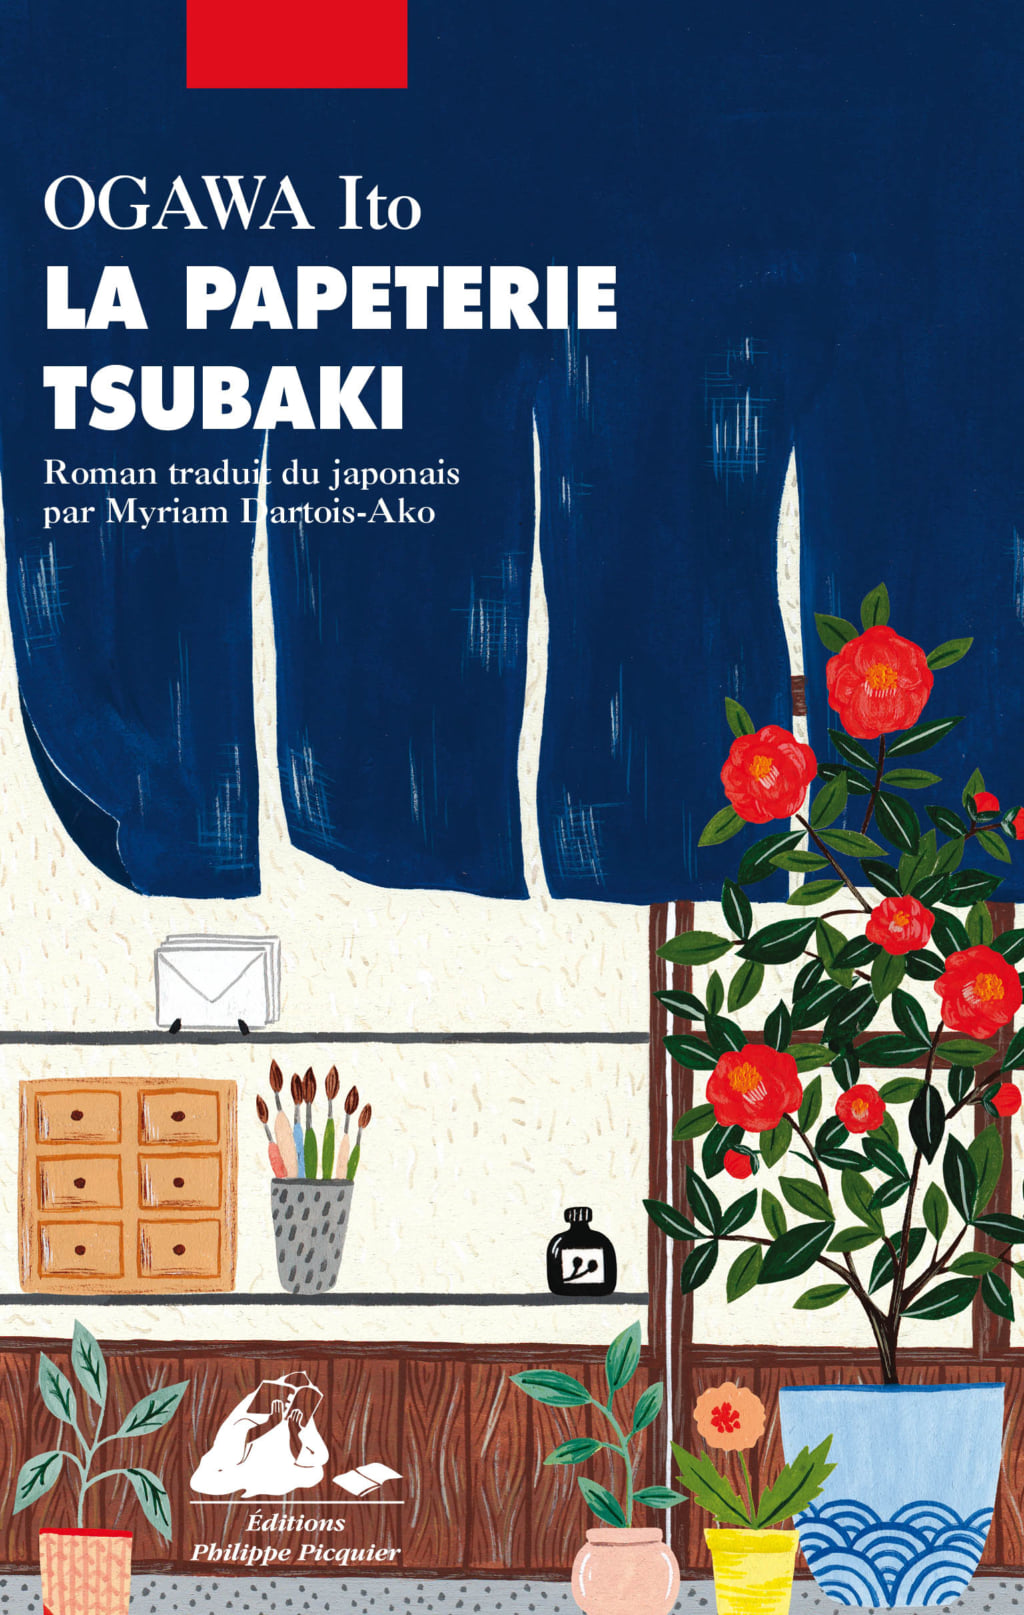 Scatola segreta intarsiata tradizionale Hakone Yosegi, 21 livelli FUJI  TSUBAKI